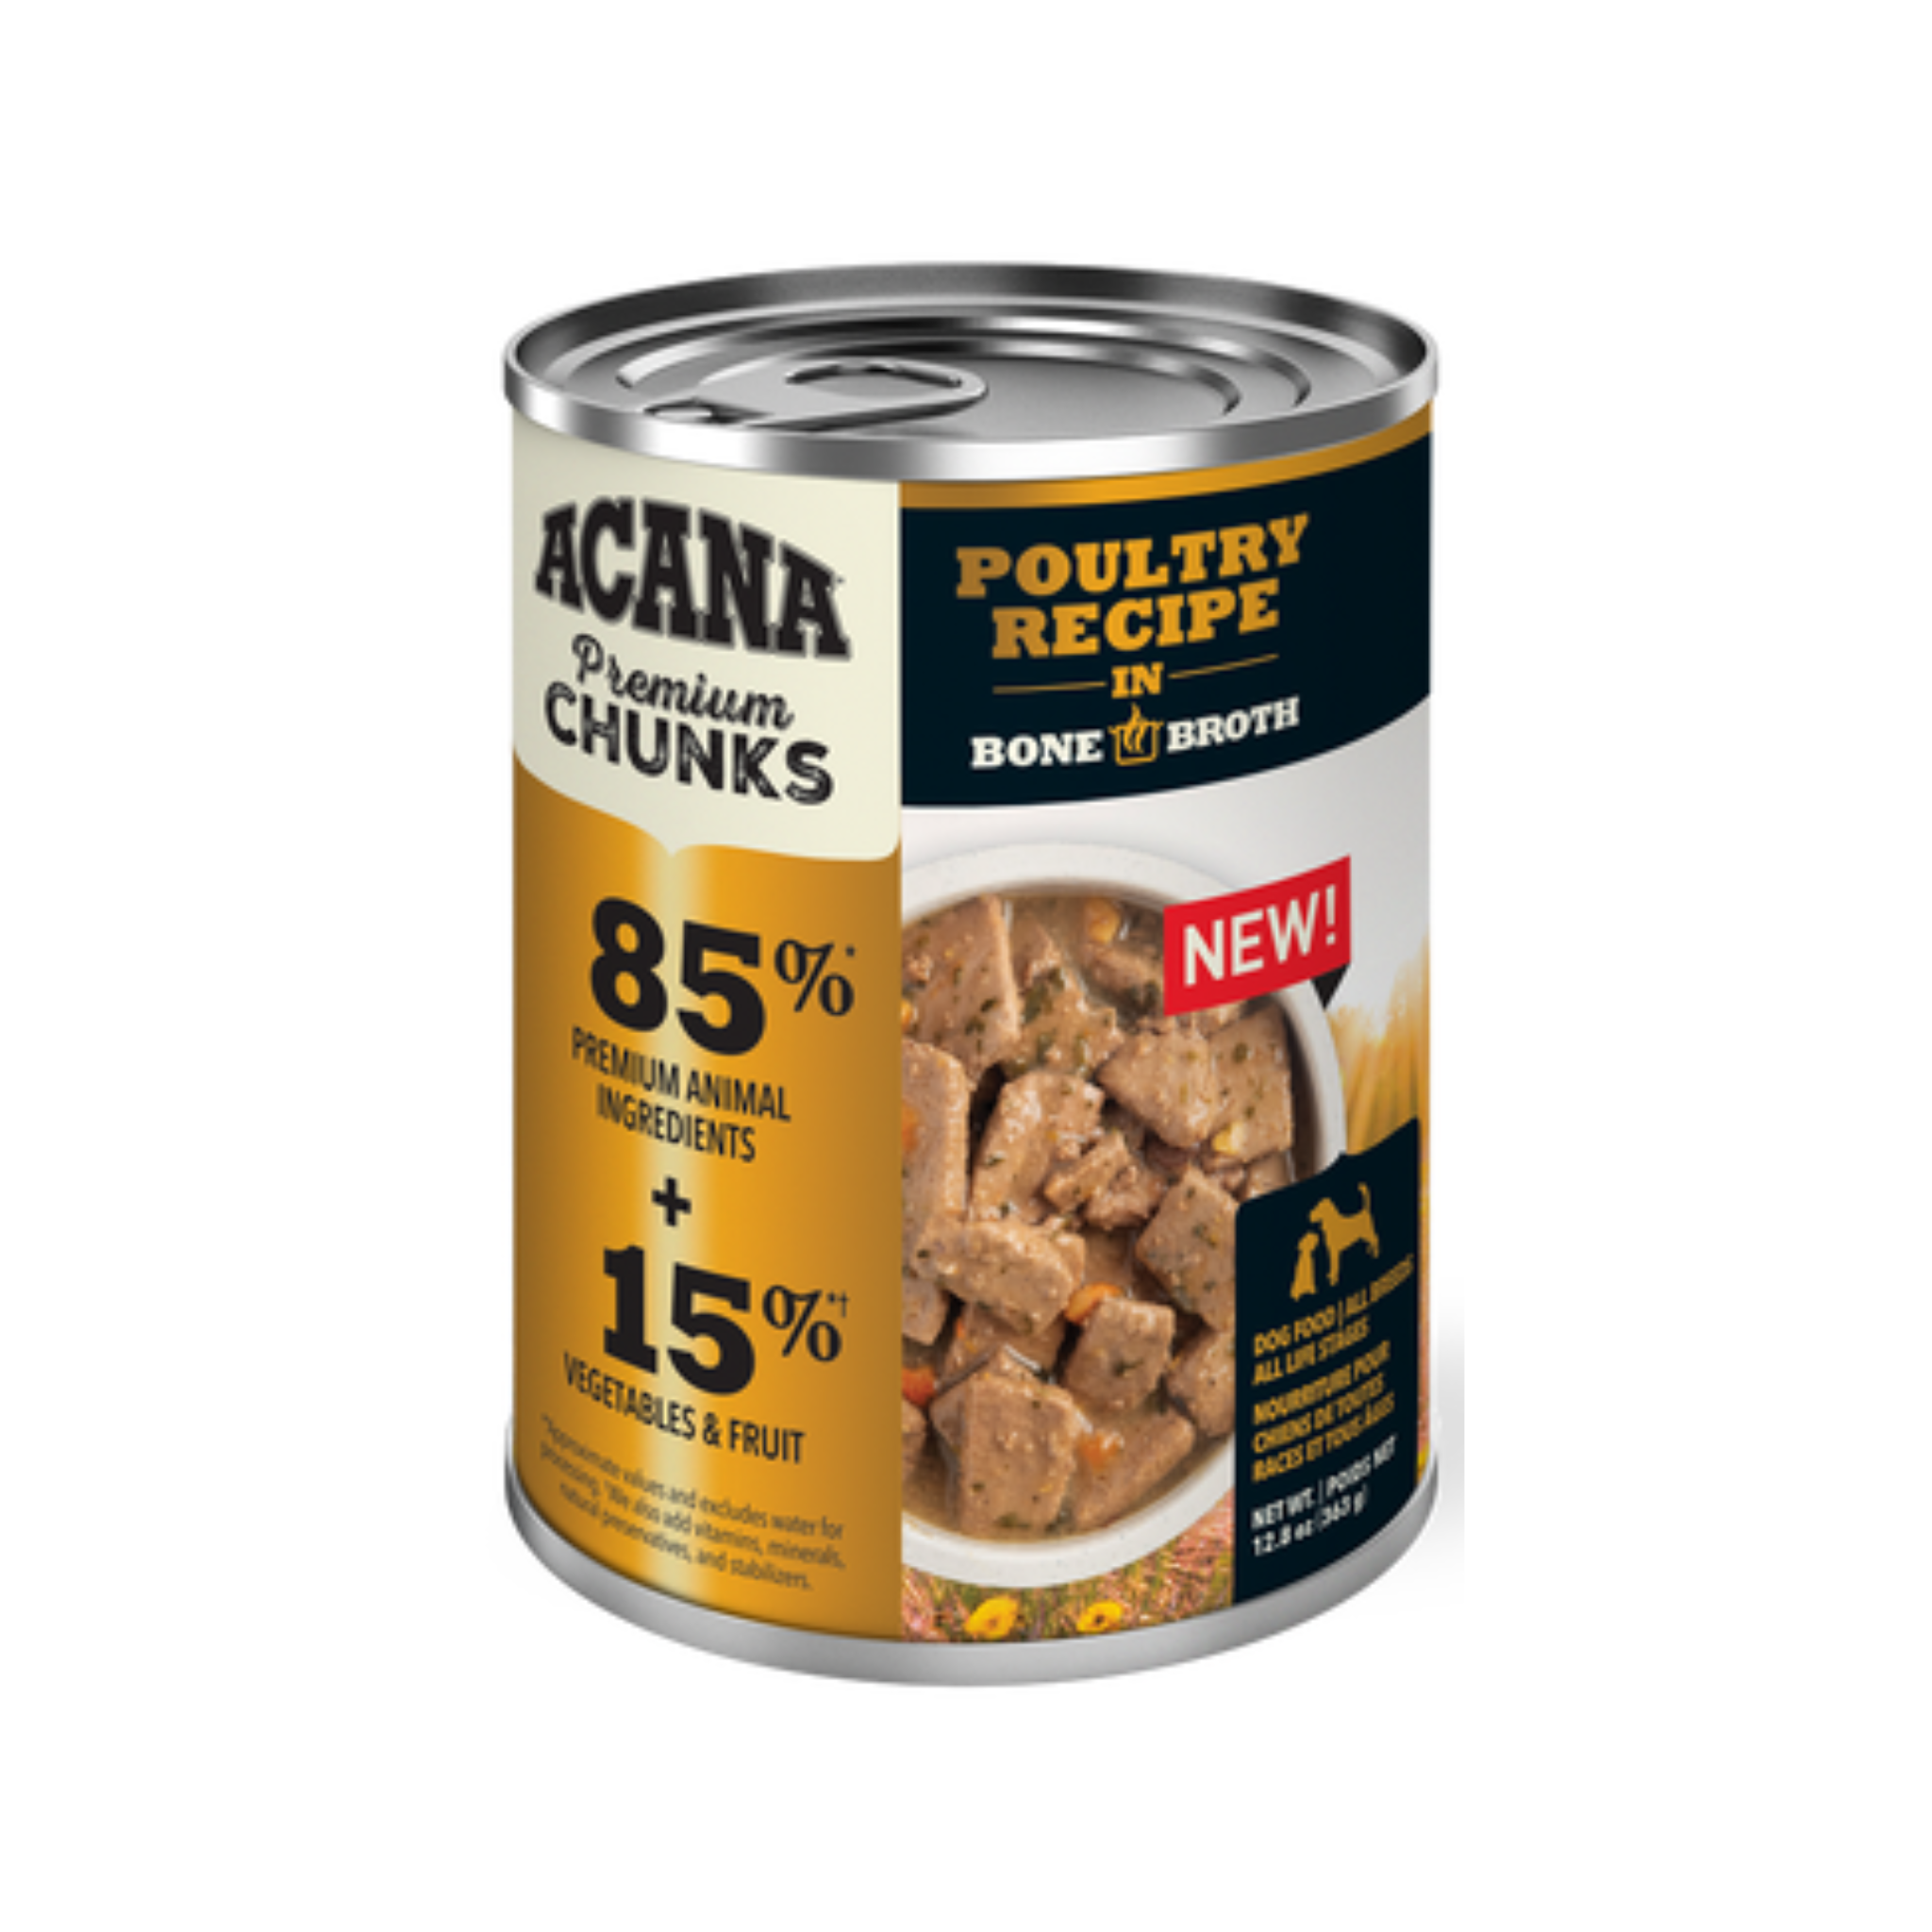 Acana Premium Chunks Grain Free Poultry Recipe in Bone Broth Dog Canned